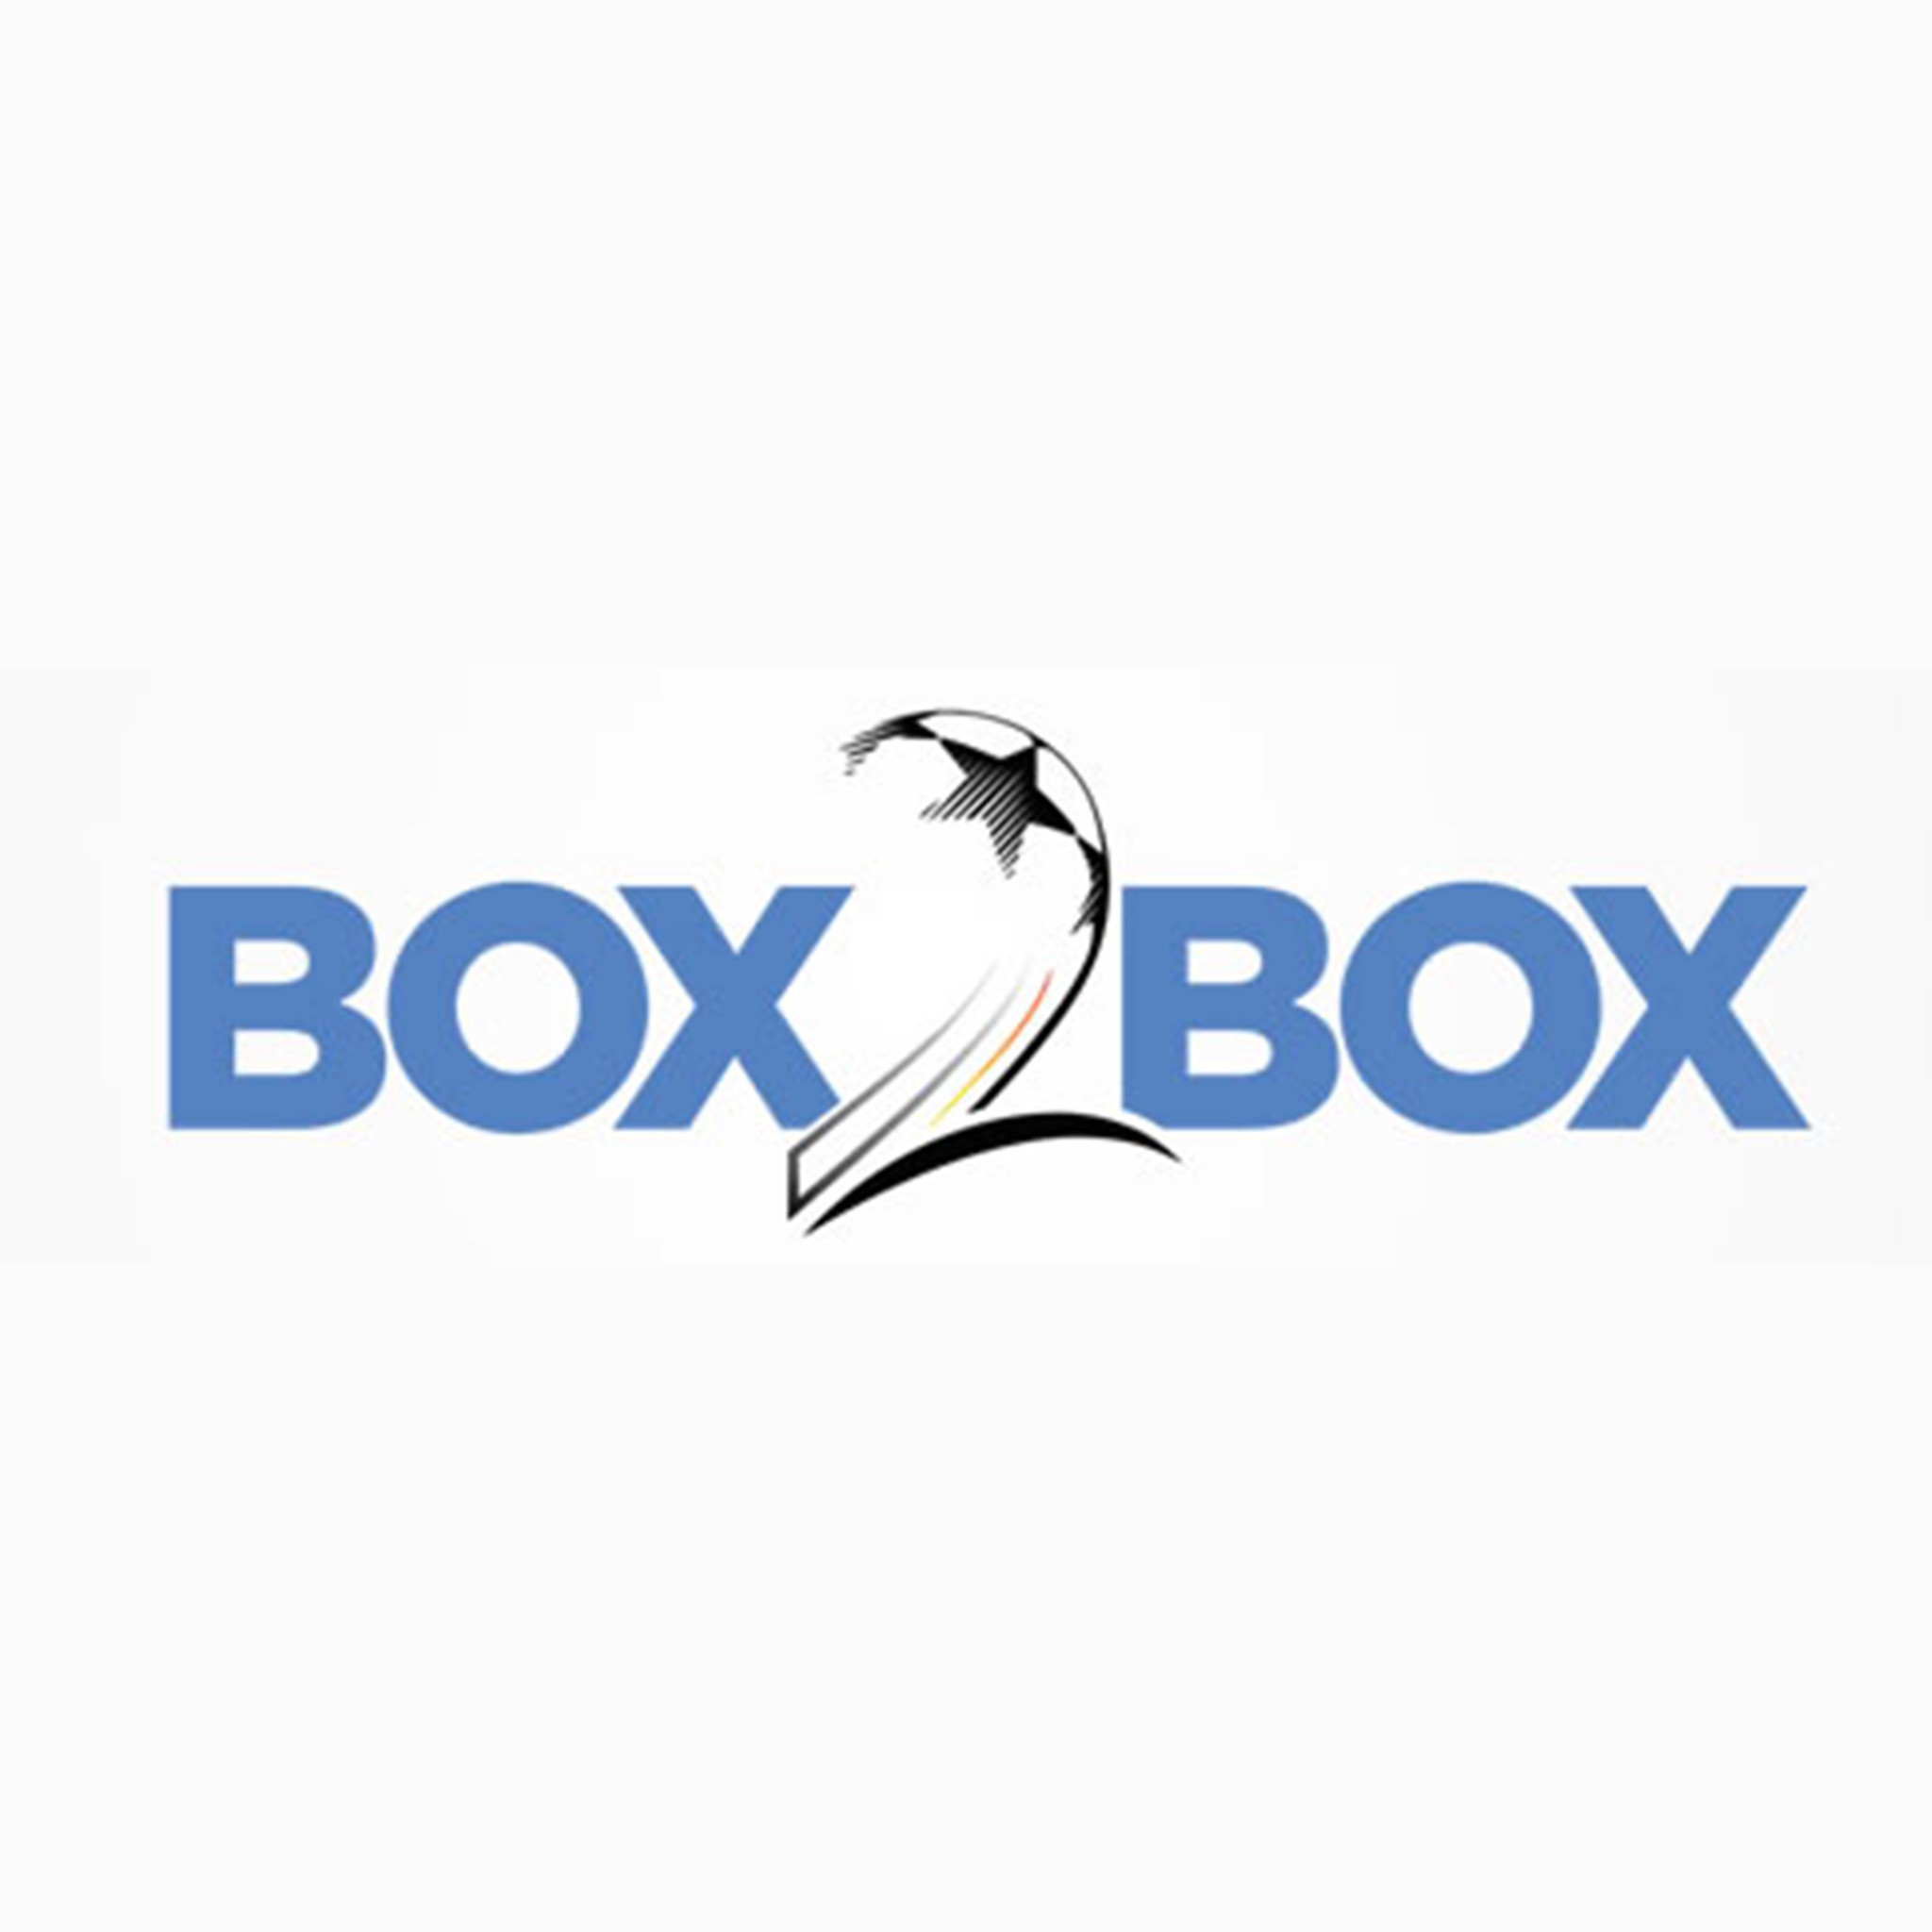 Box2Box - Robbie Thomson on football fan culture, Andy Jones on Burnley's bounce-back